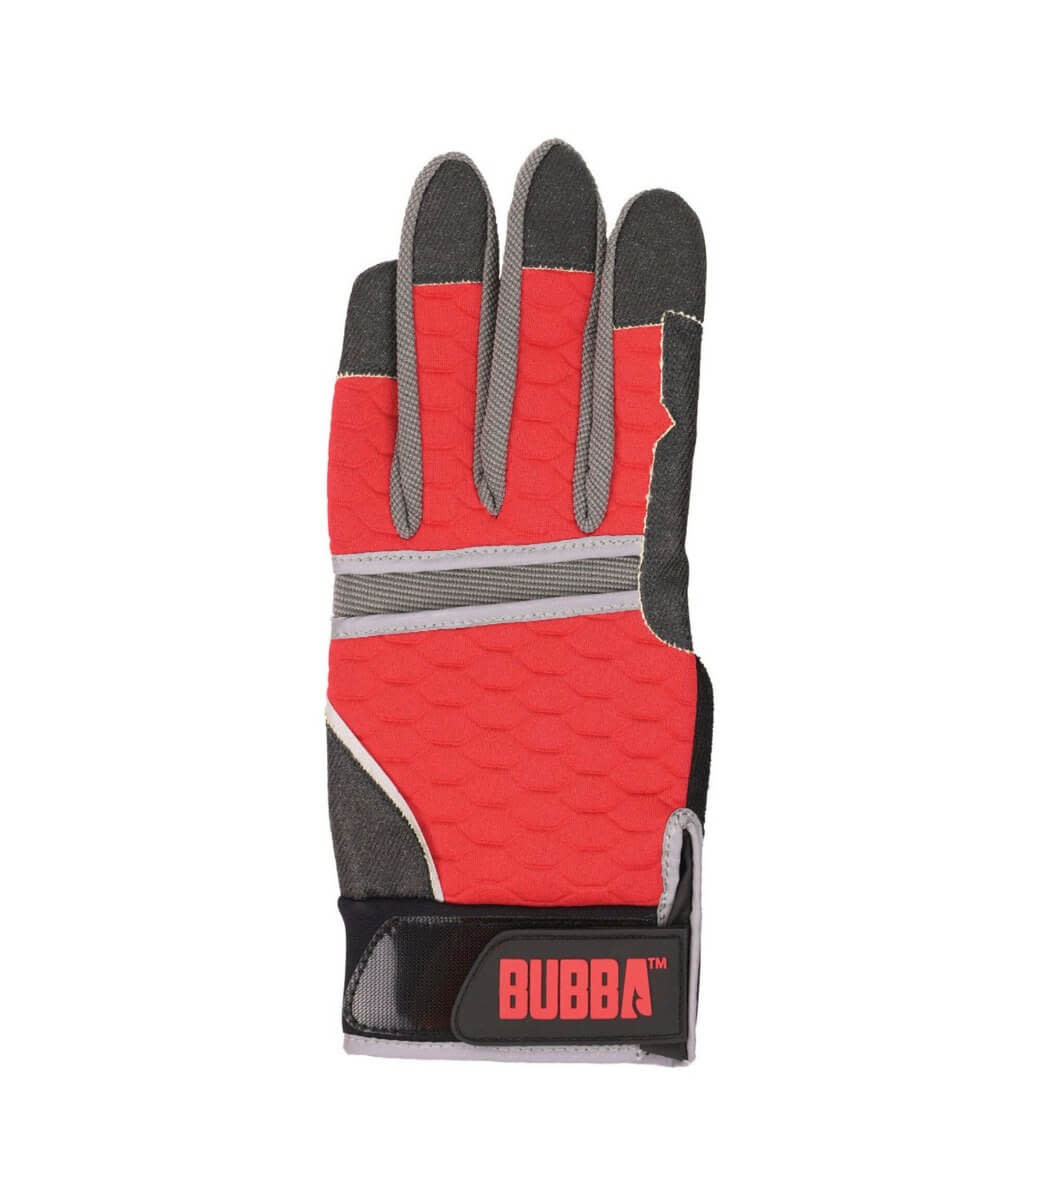 Bubba Fishing Gloves - Ramakko's Source For Adventure